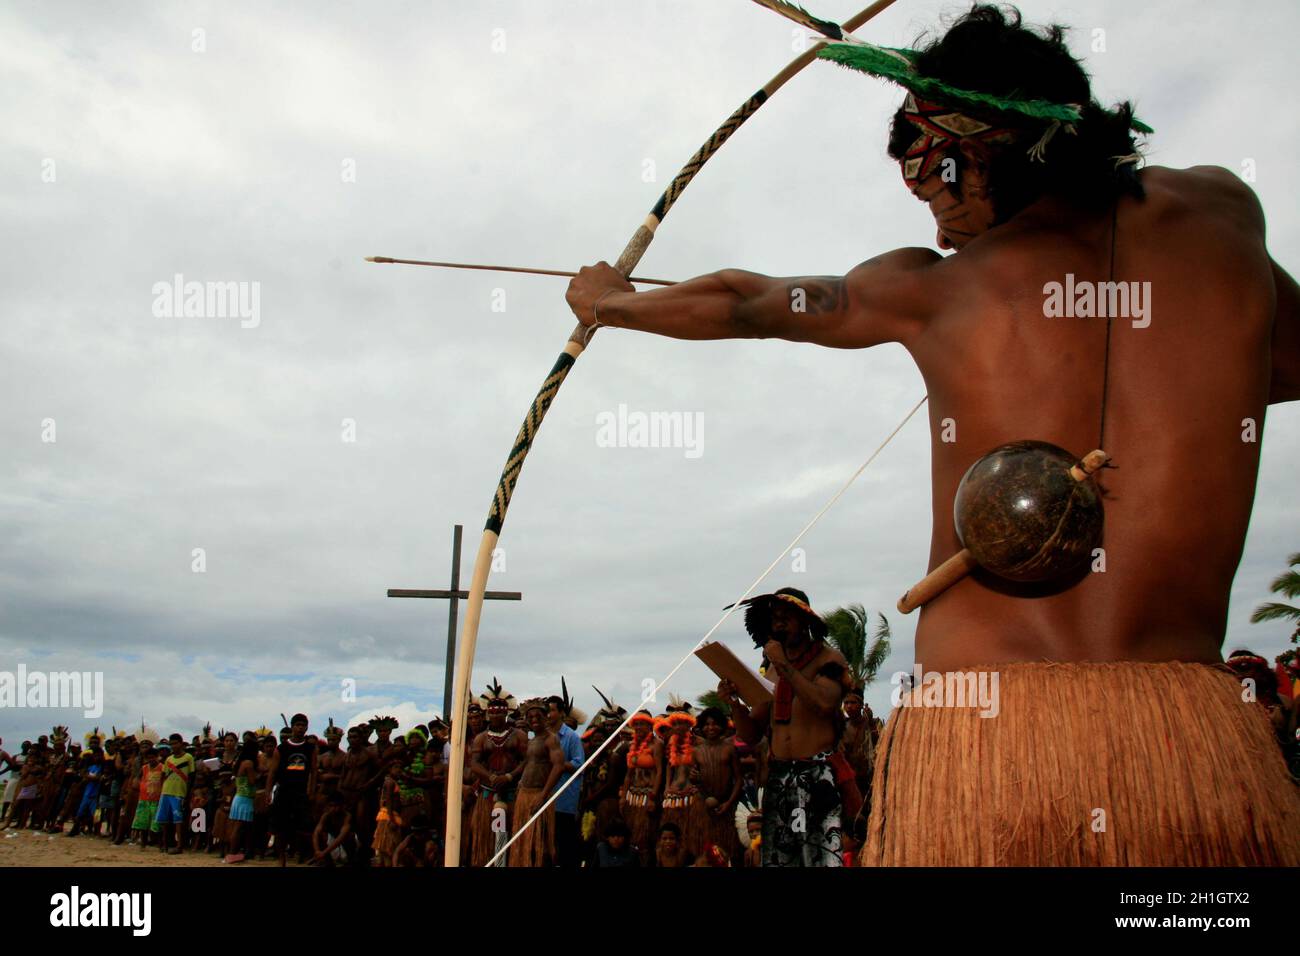 Amazon tribe bow arrow fotografías e imágenes de alta resolución - Alamy